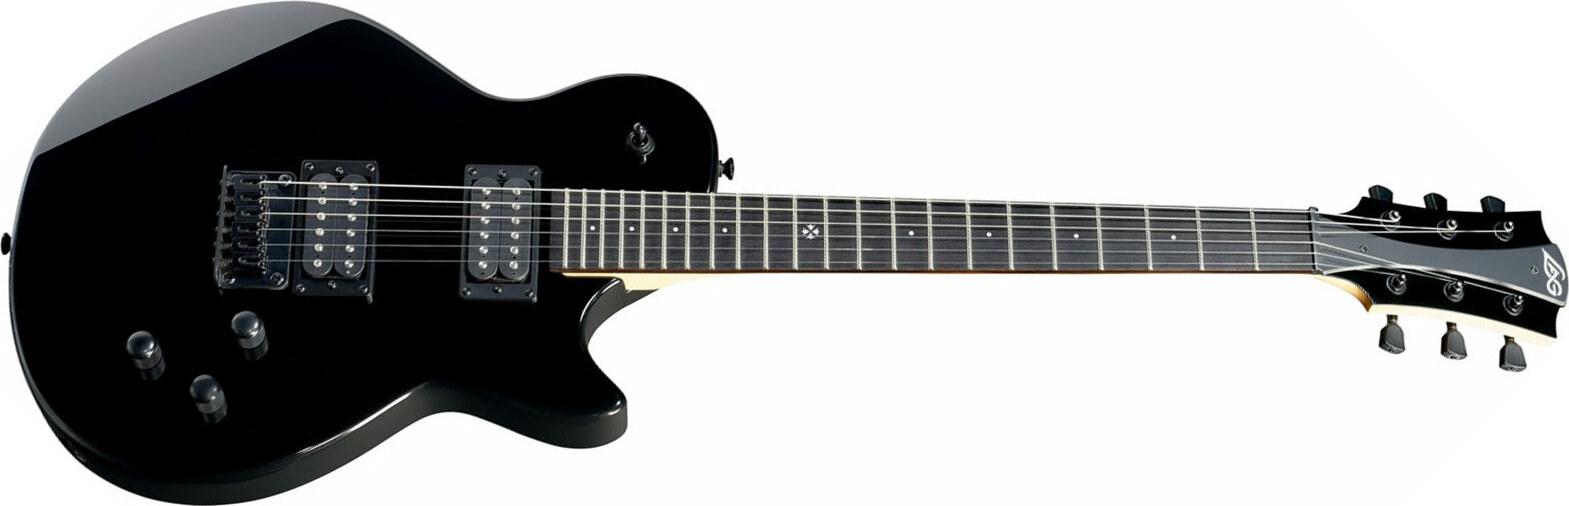 Lag Imperator 60 Hh Ht Rw - Black - Guitarra eléctrica de corte único. - Main picture